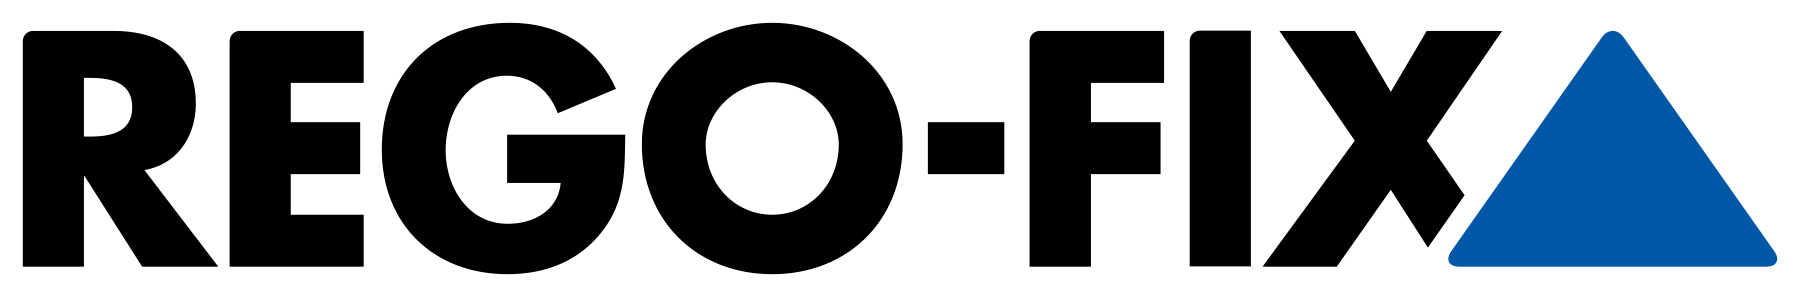 REGOFIX Logo RGB